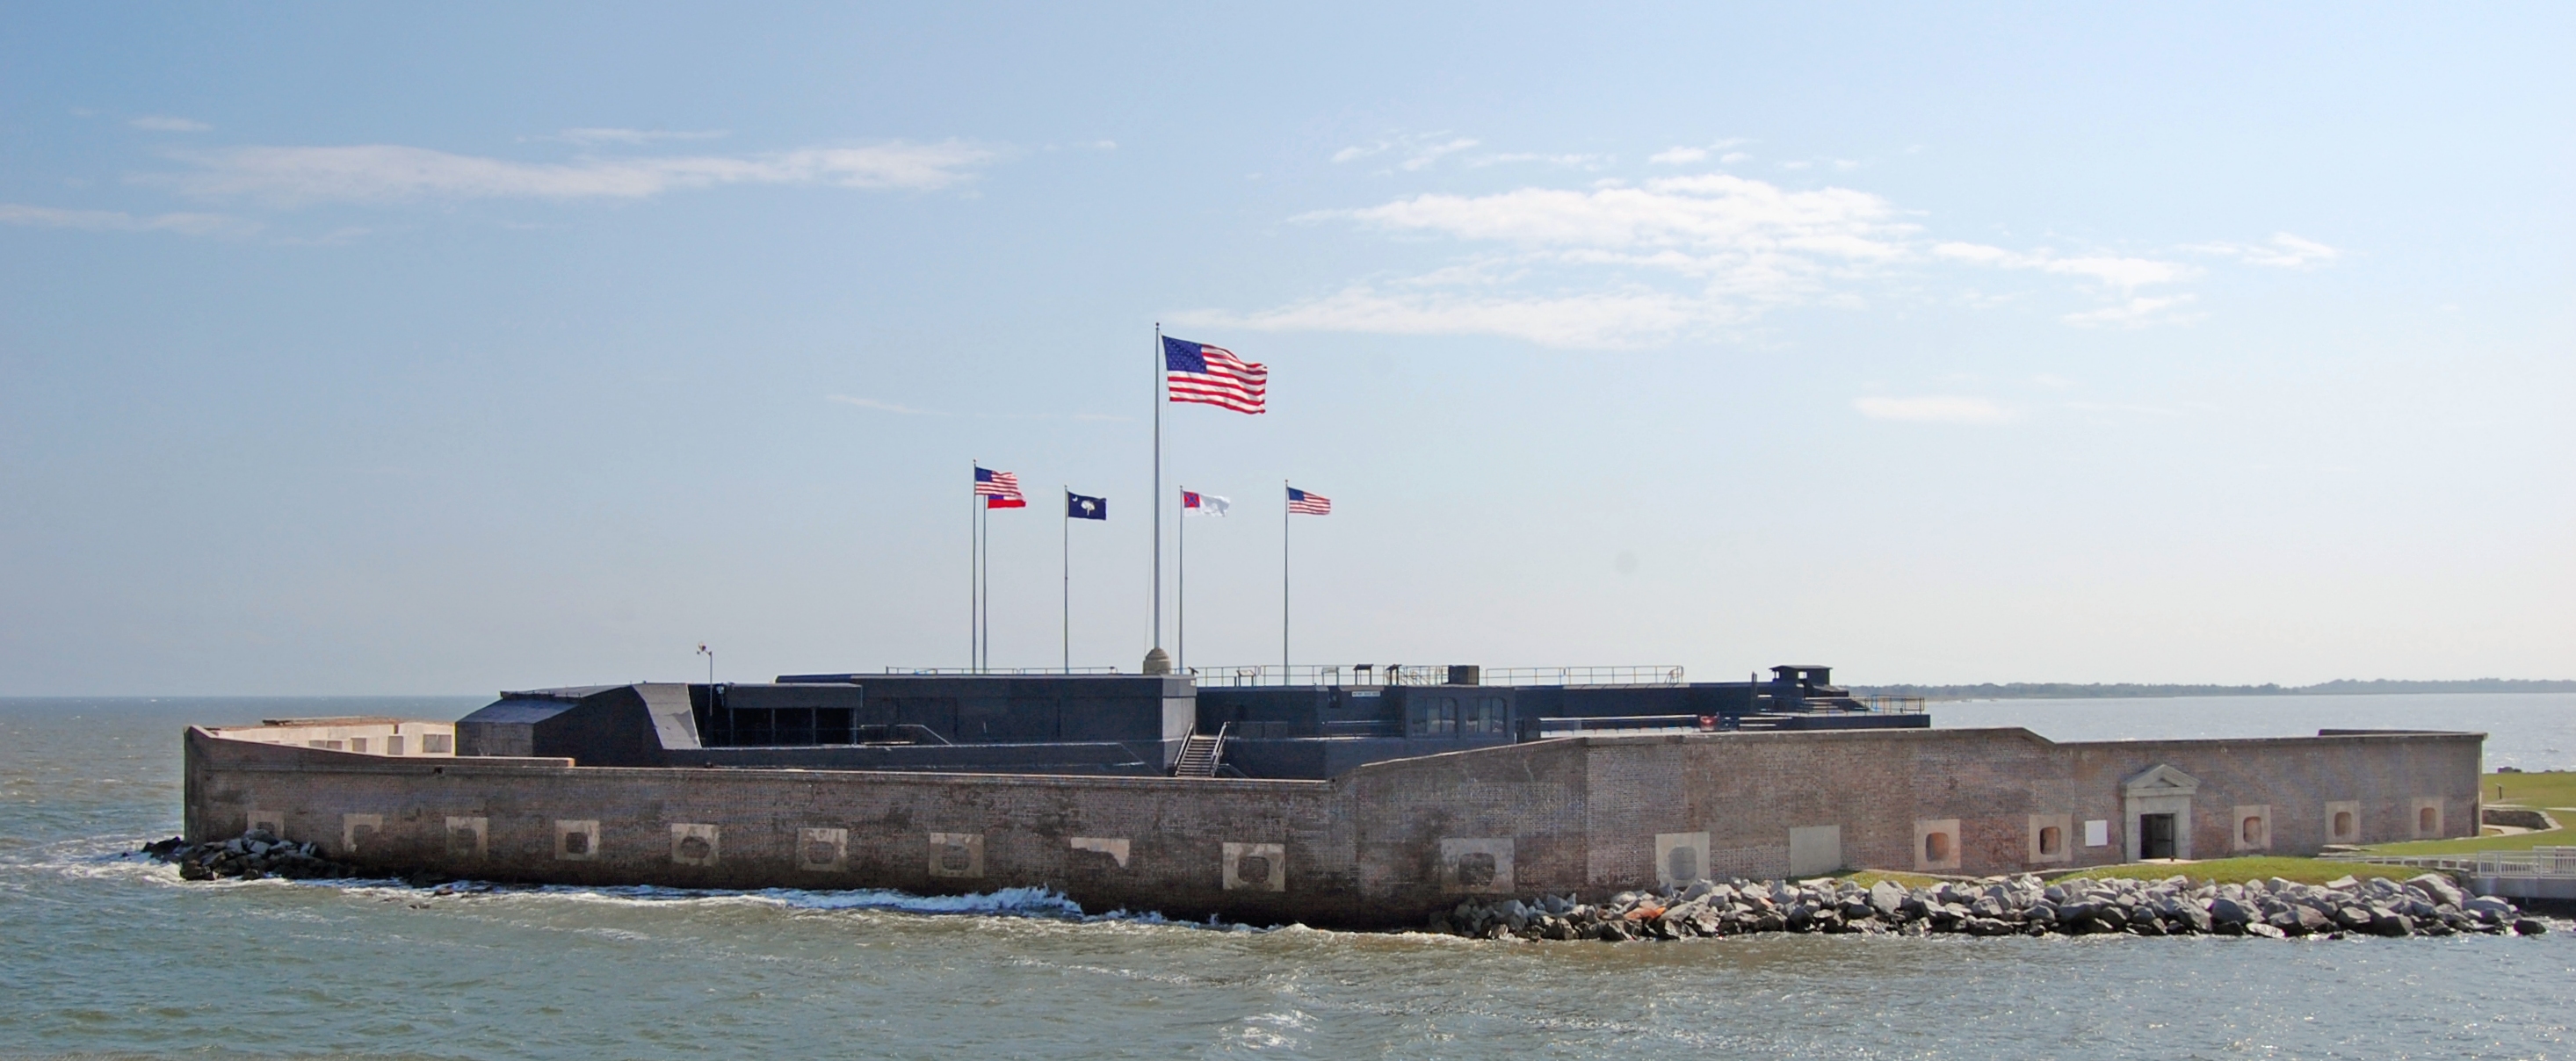 Fort Sumter Civil War